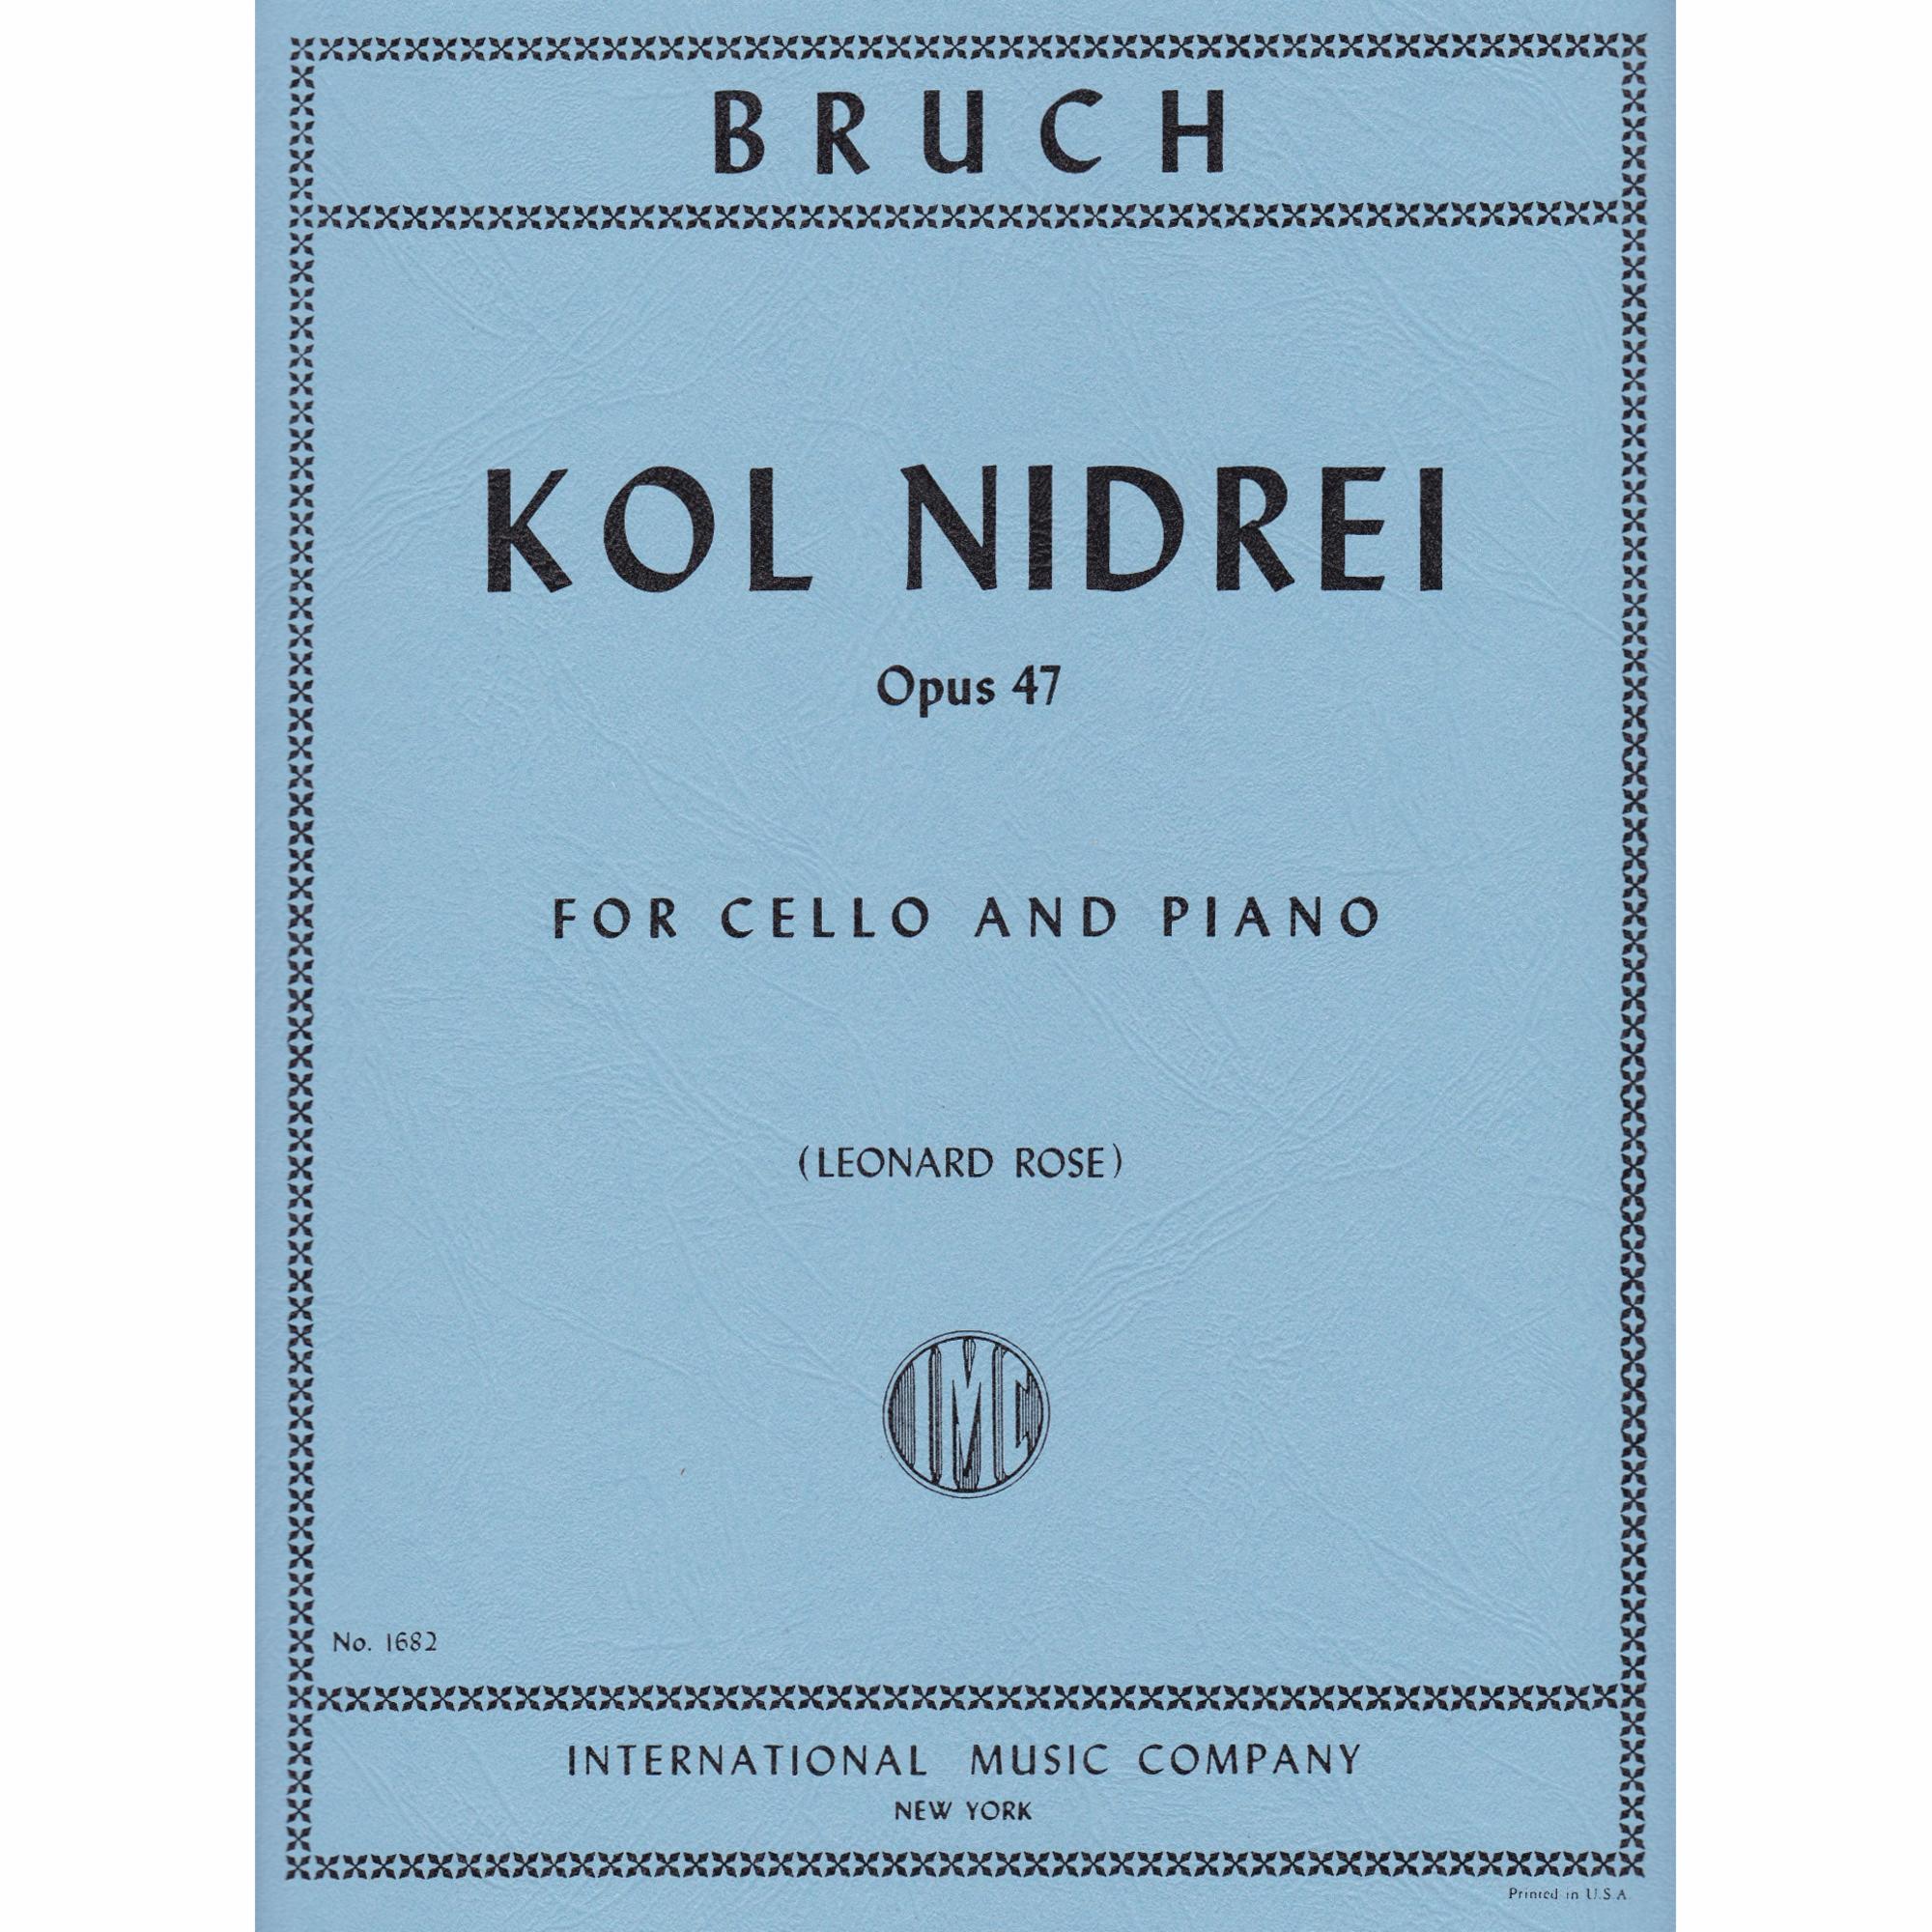 Kol Nidrei for Cello and Piano, Op. 47